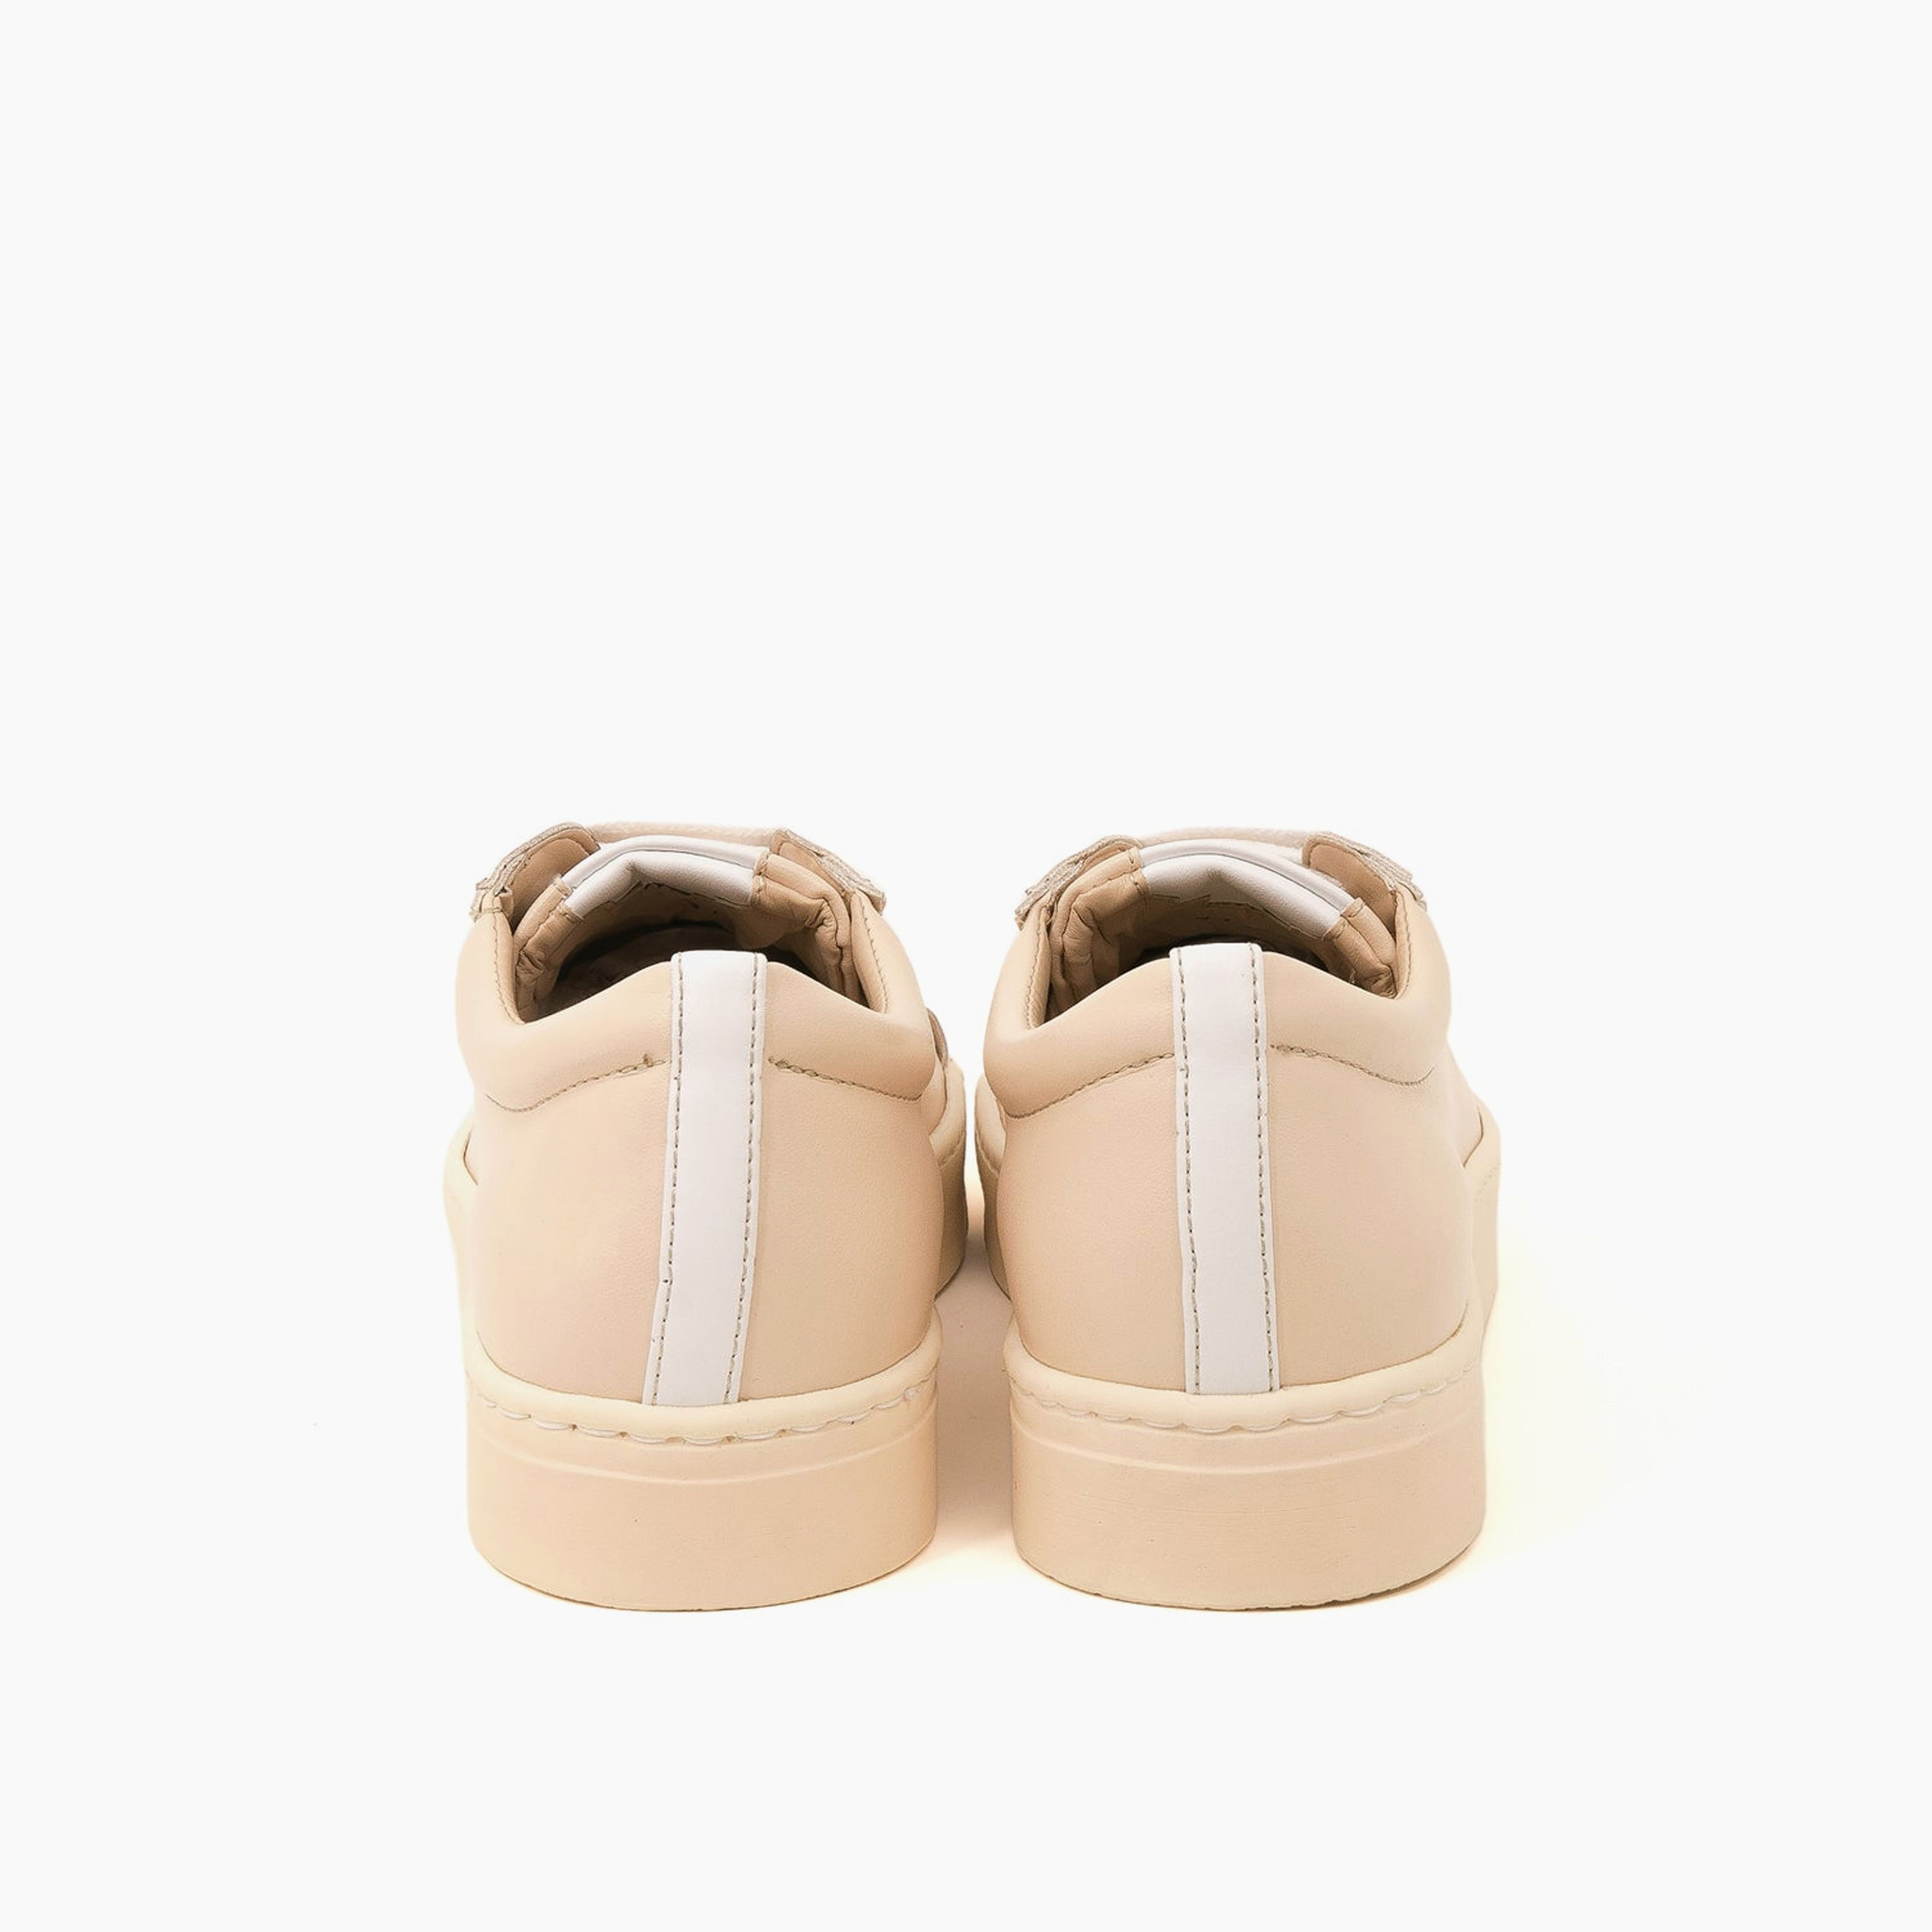 MEL sand/white vegan apple leather sneakers